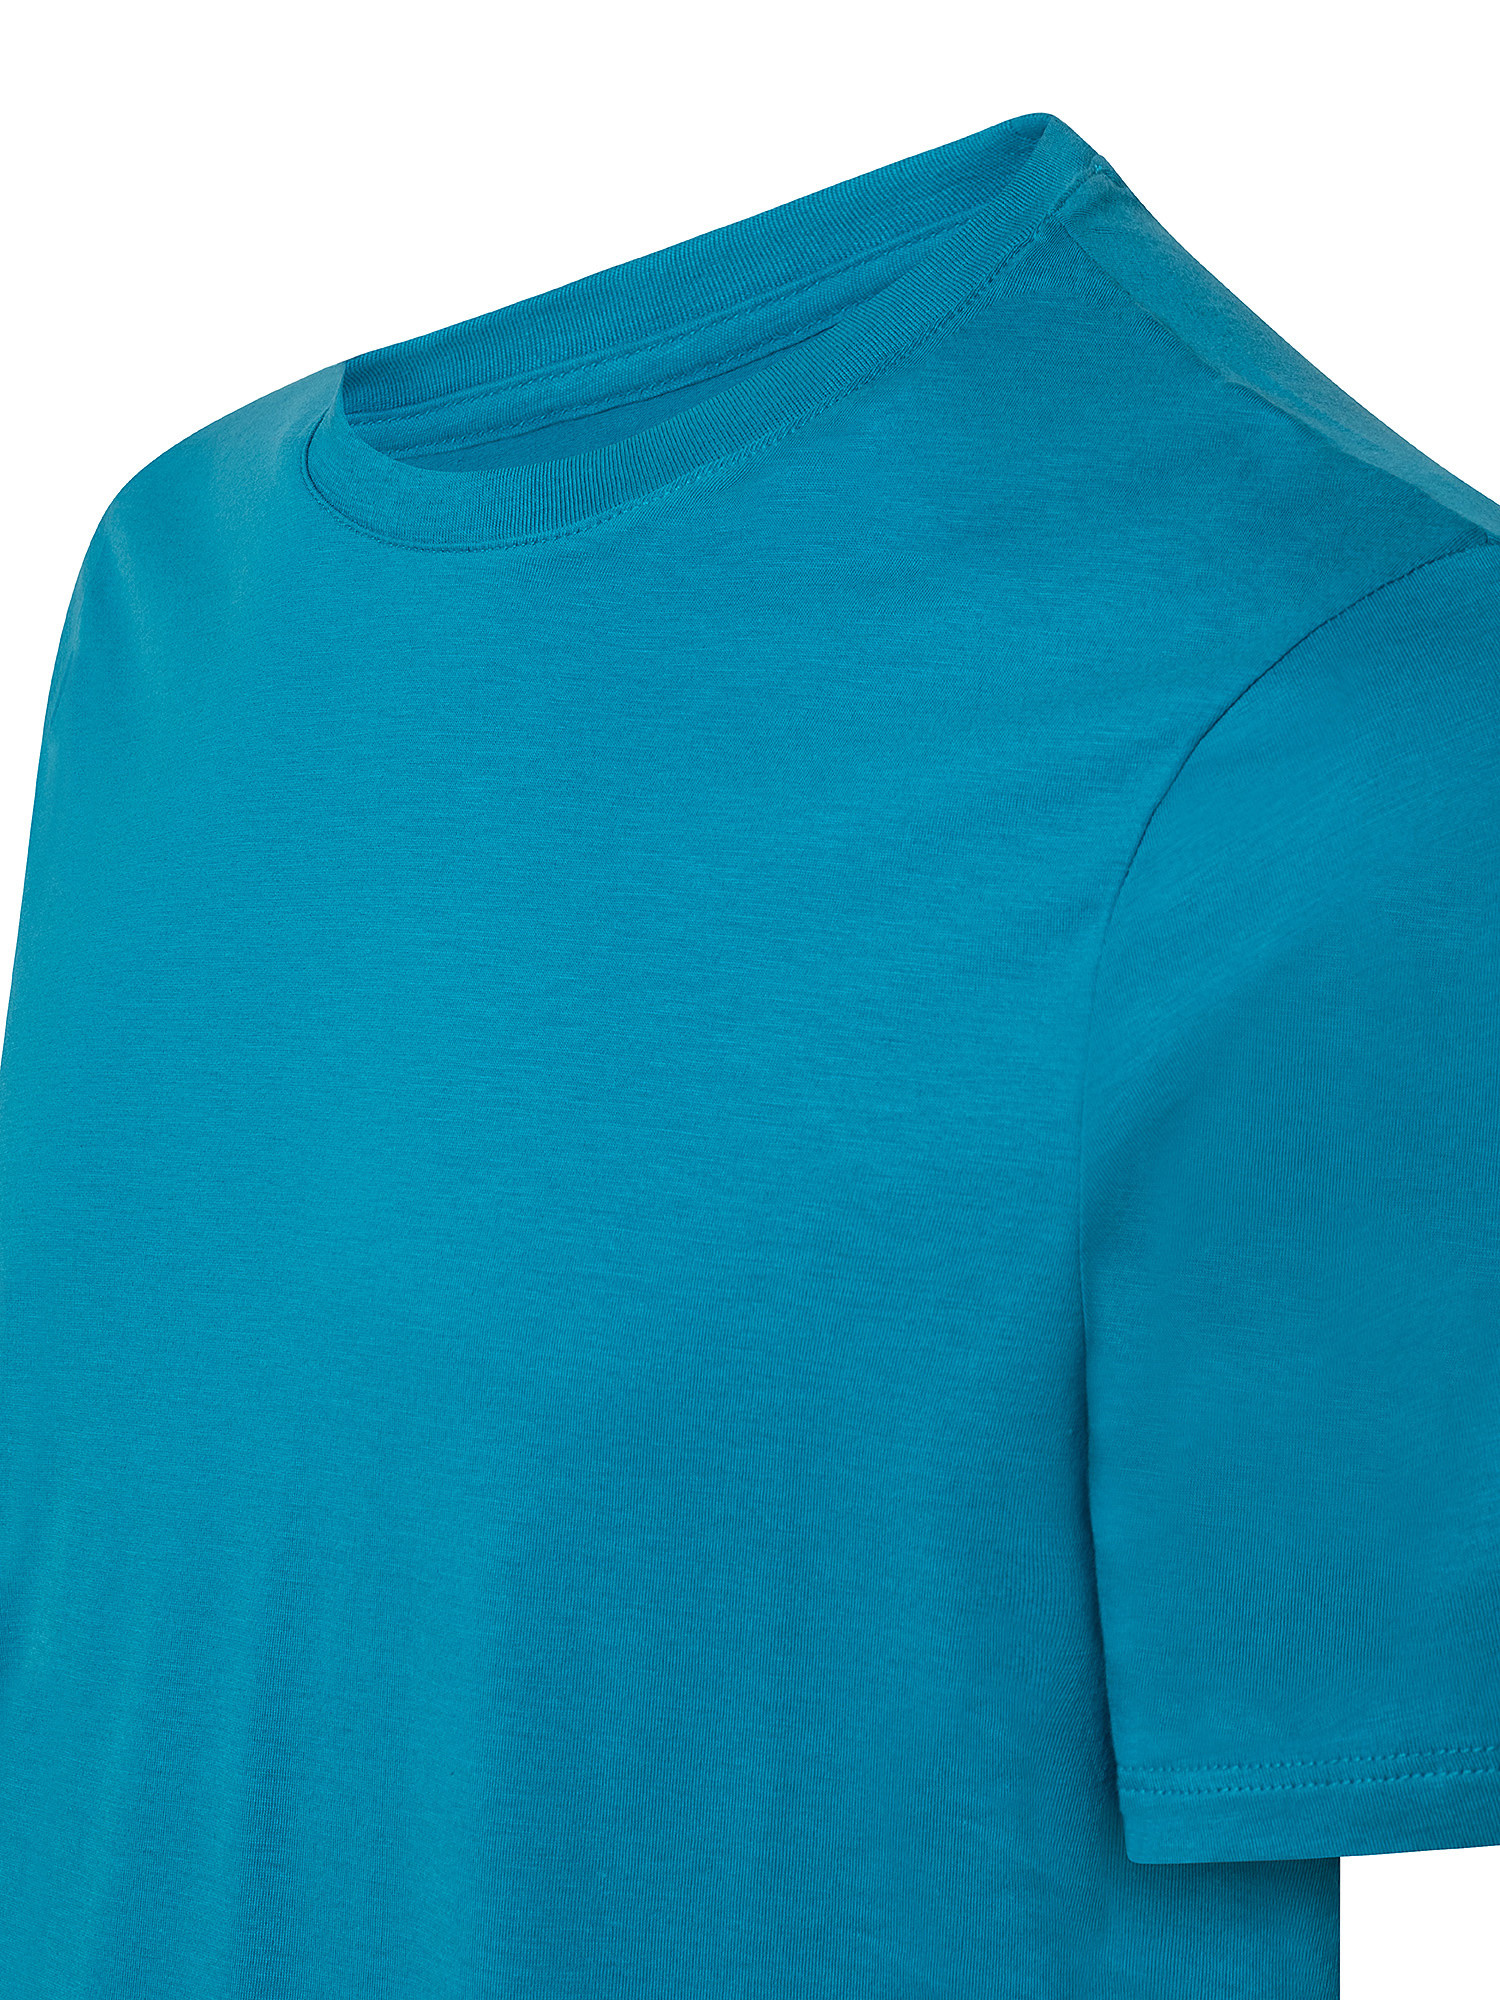 T-shirt, Turquoise, large image number 2